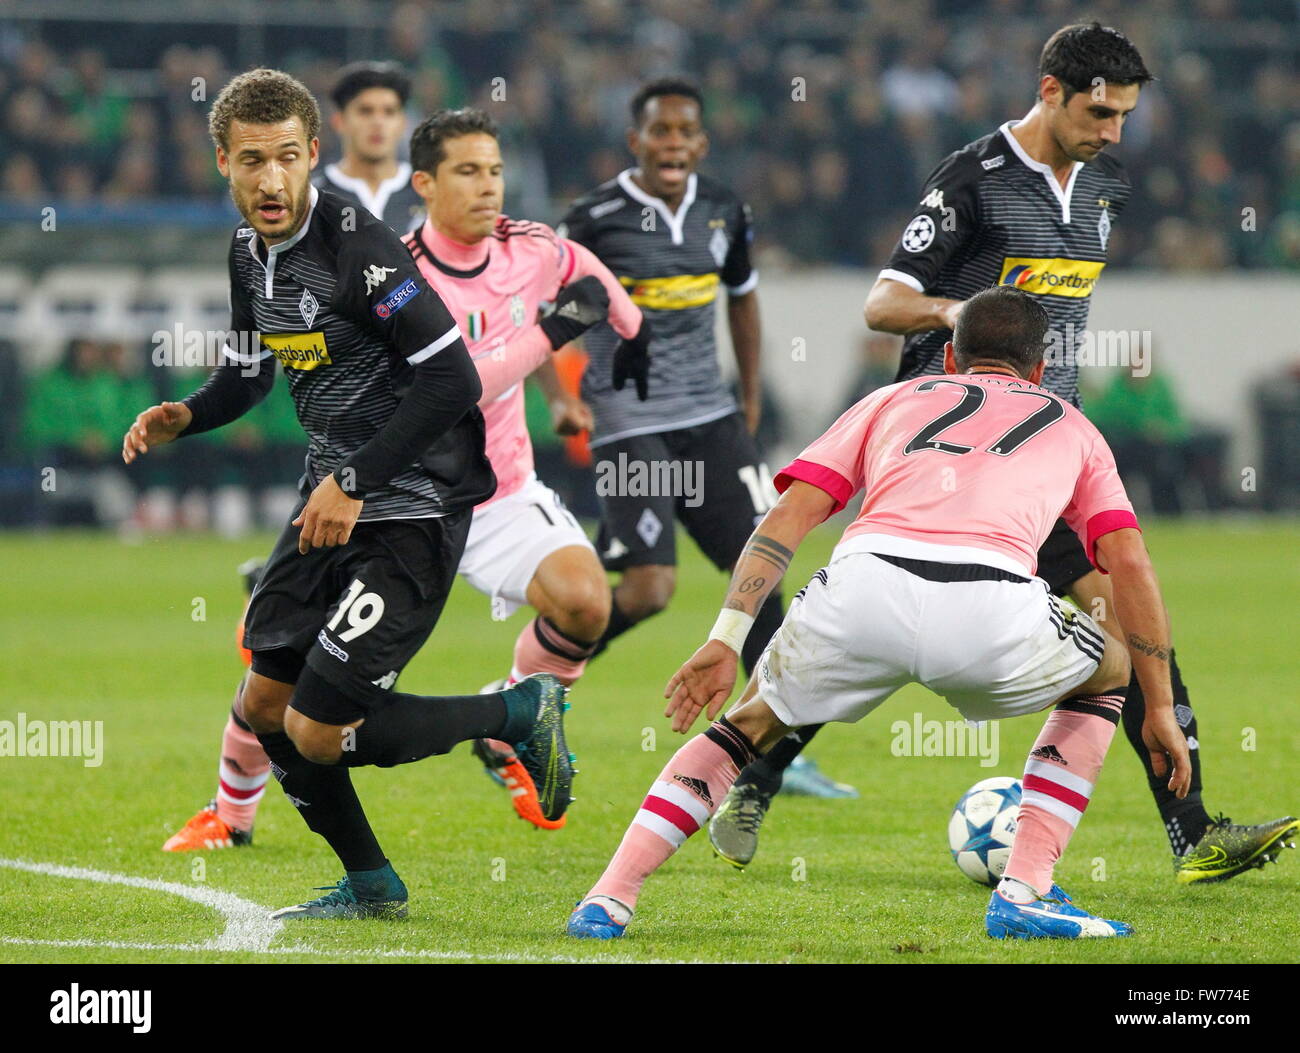 Fabian Johnson in action during the champion league match Monchengladbach - Juventus Monchengladbach, November 3, 2015 Stock Photo